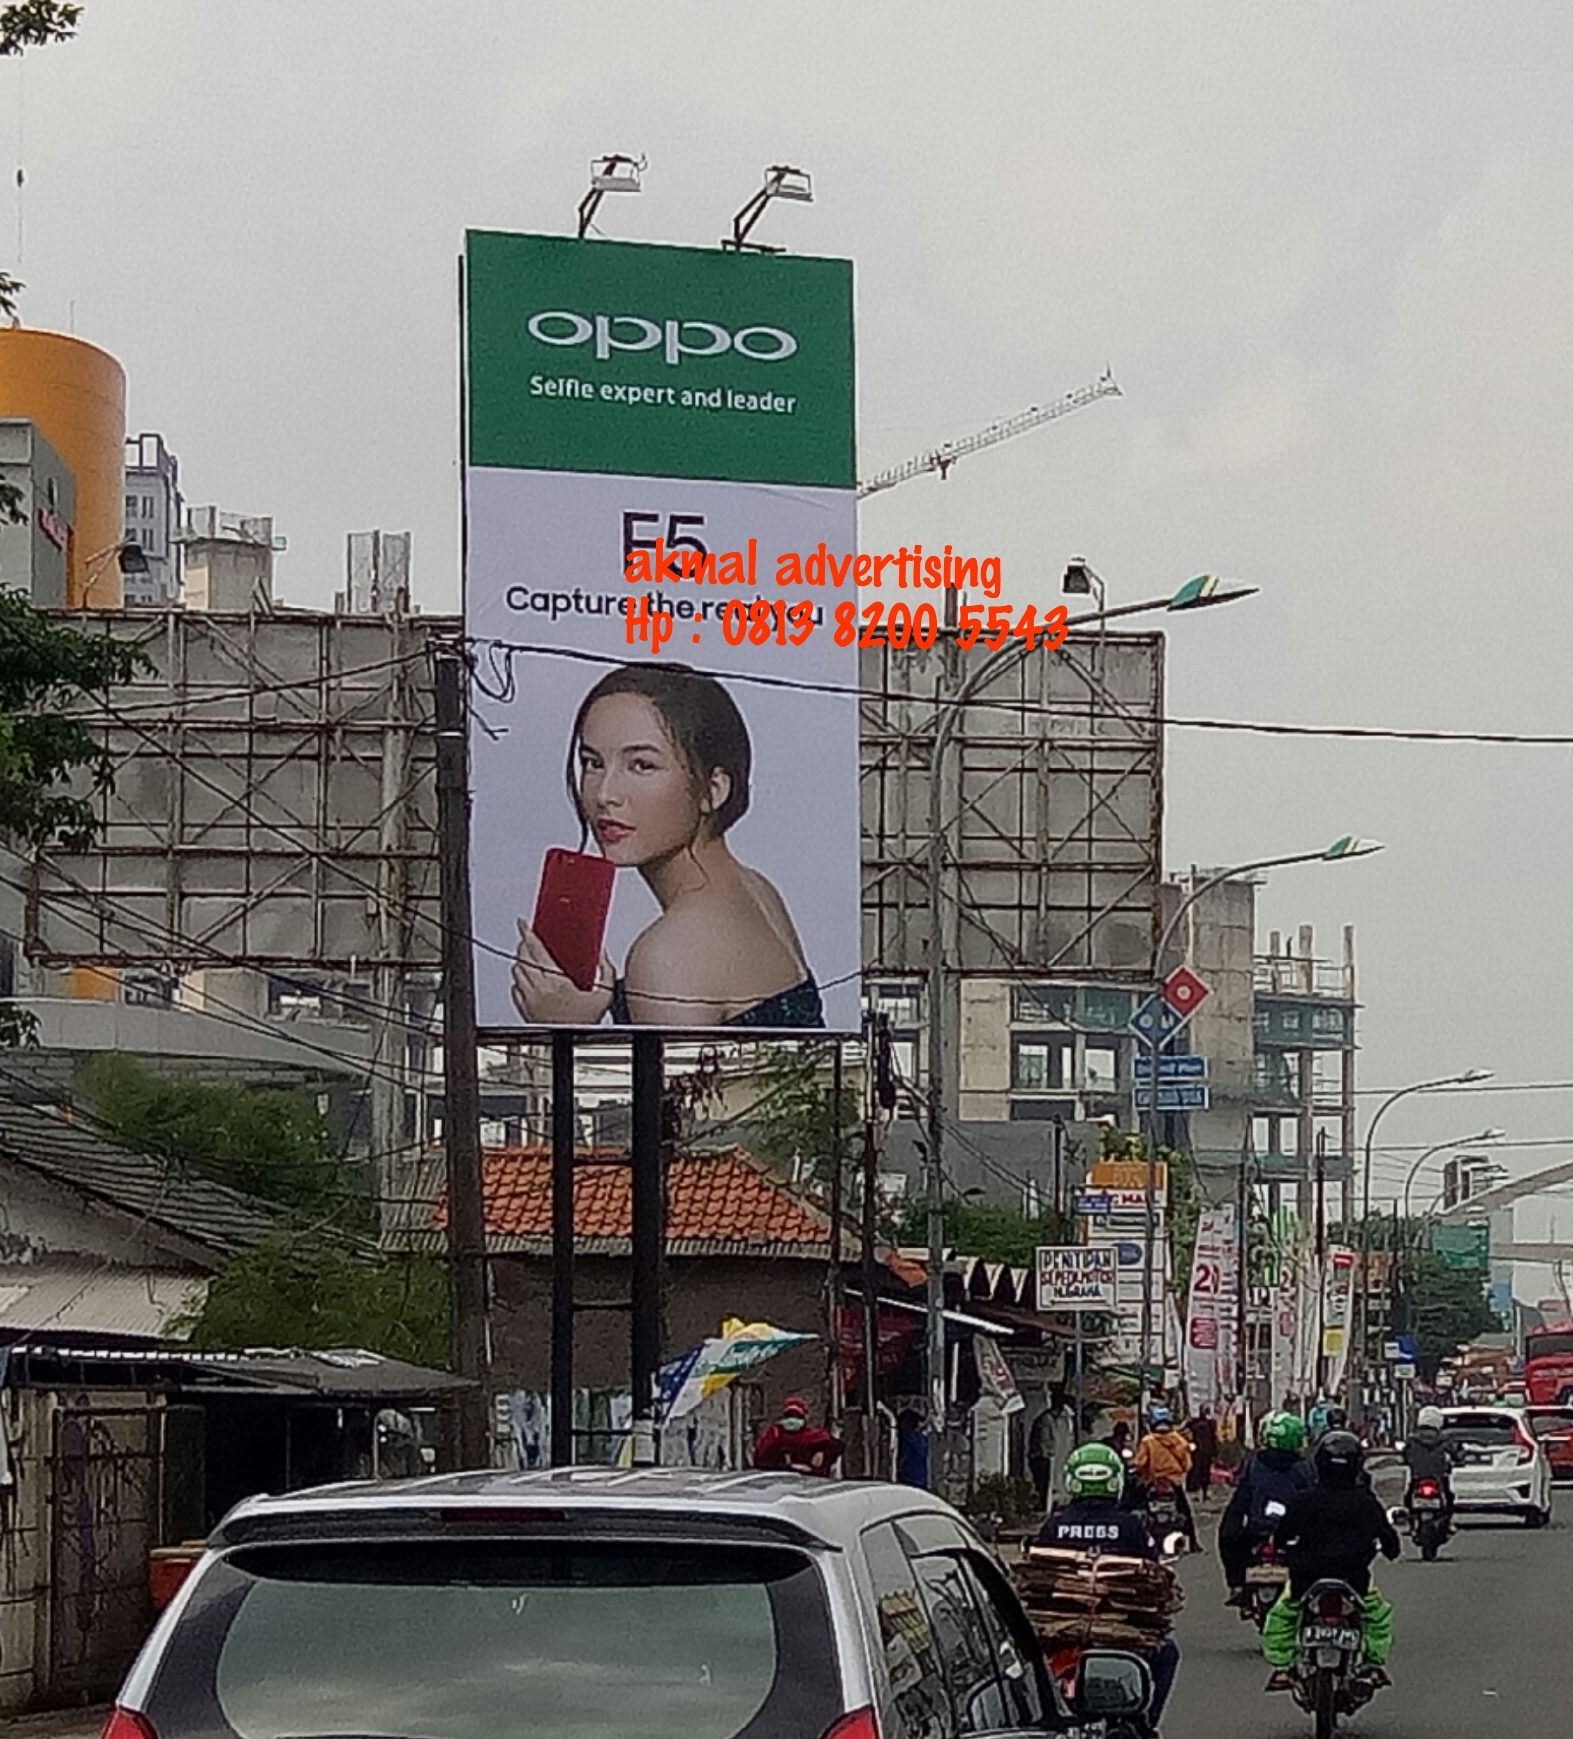 Jasa-billboard-di-sukabumi